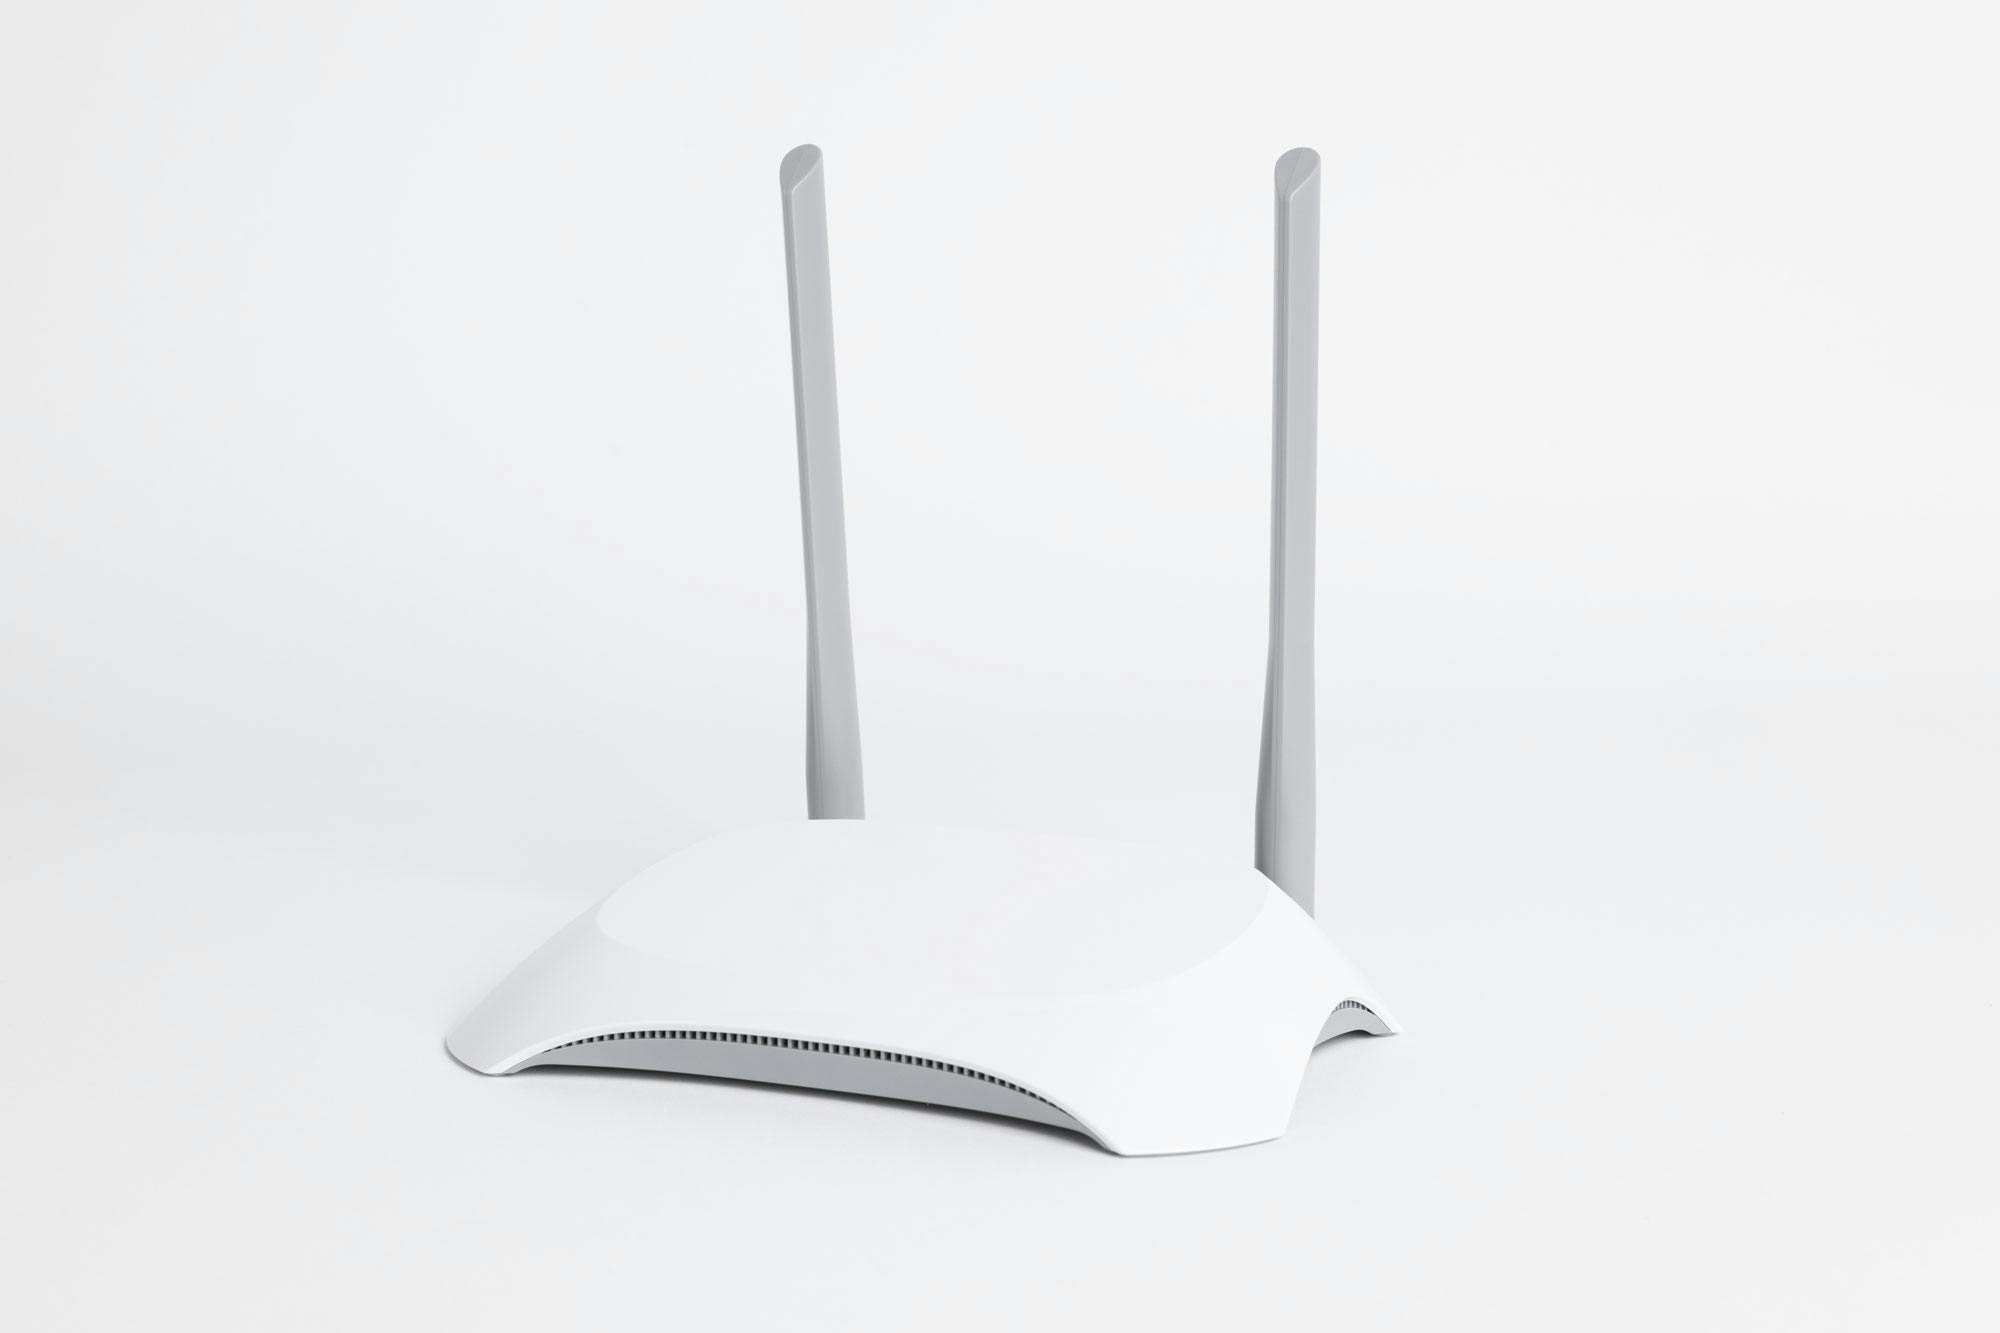 wireless-router-mockup-5g-network-device.jpg